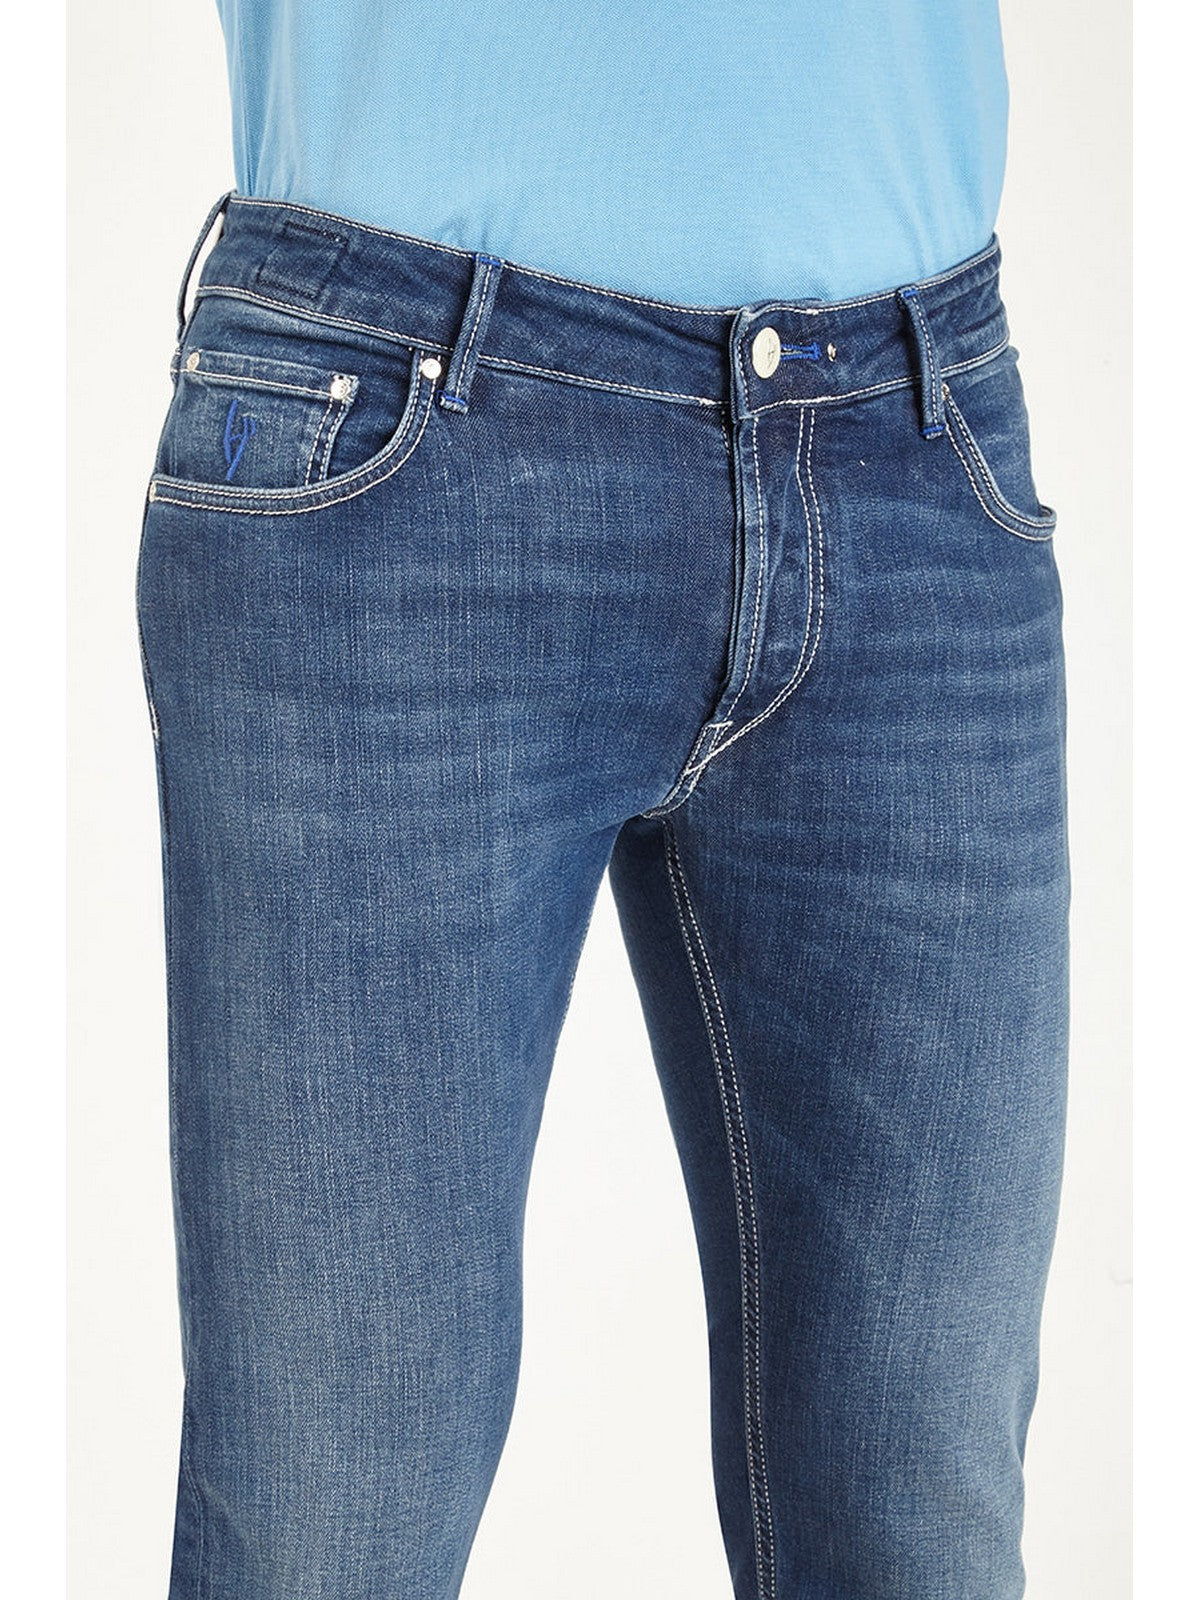 HANDPICKED Jeans Uomo  ORVIETO 03140W2 002 Blu